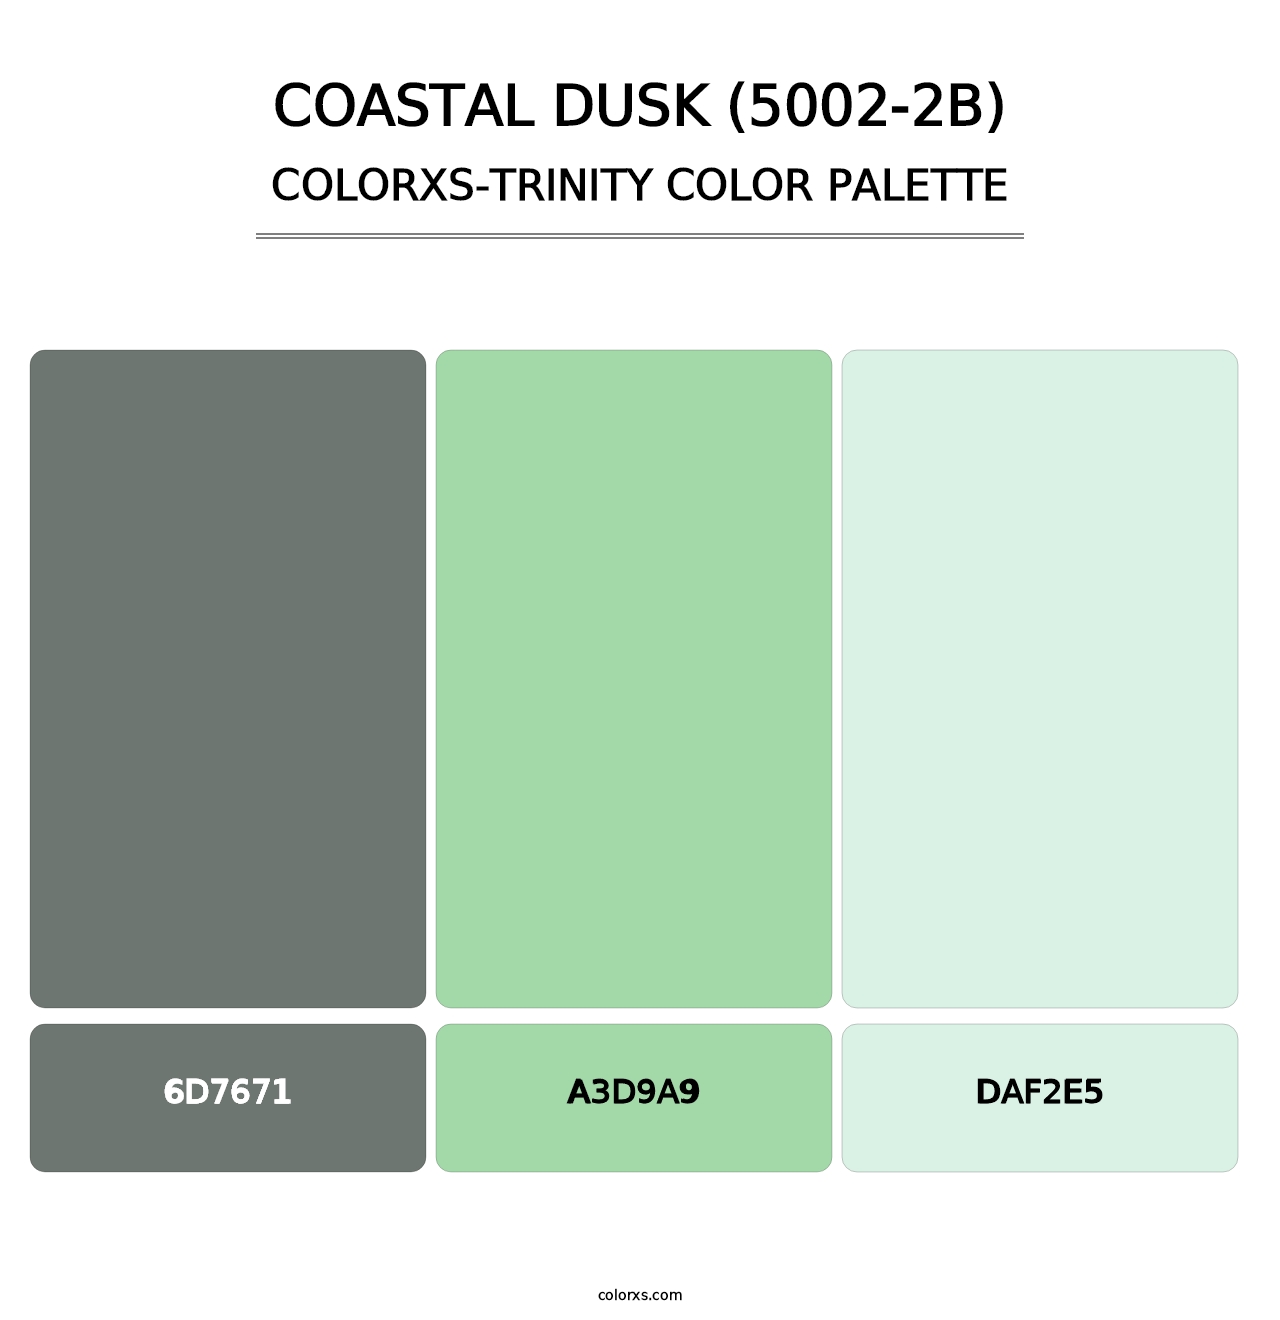 Coastal Dusk (5002-2B) - Colorxs Trinity Palette